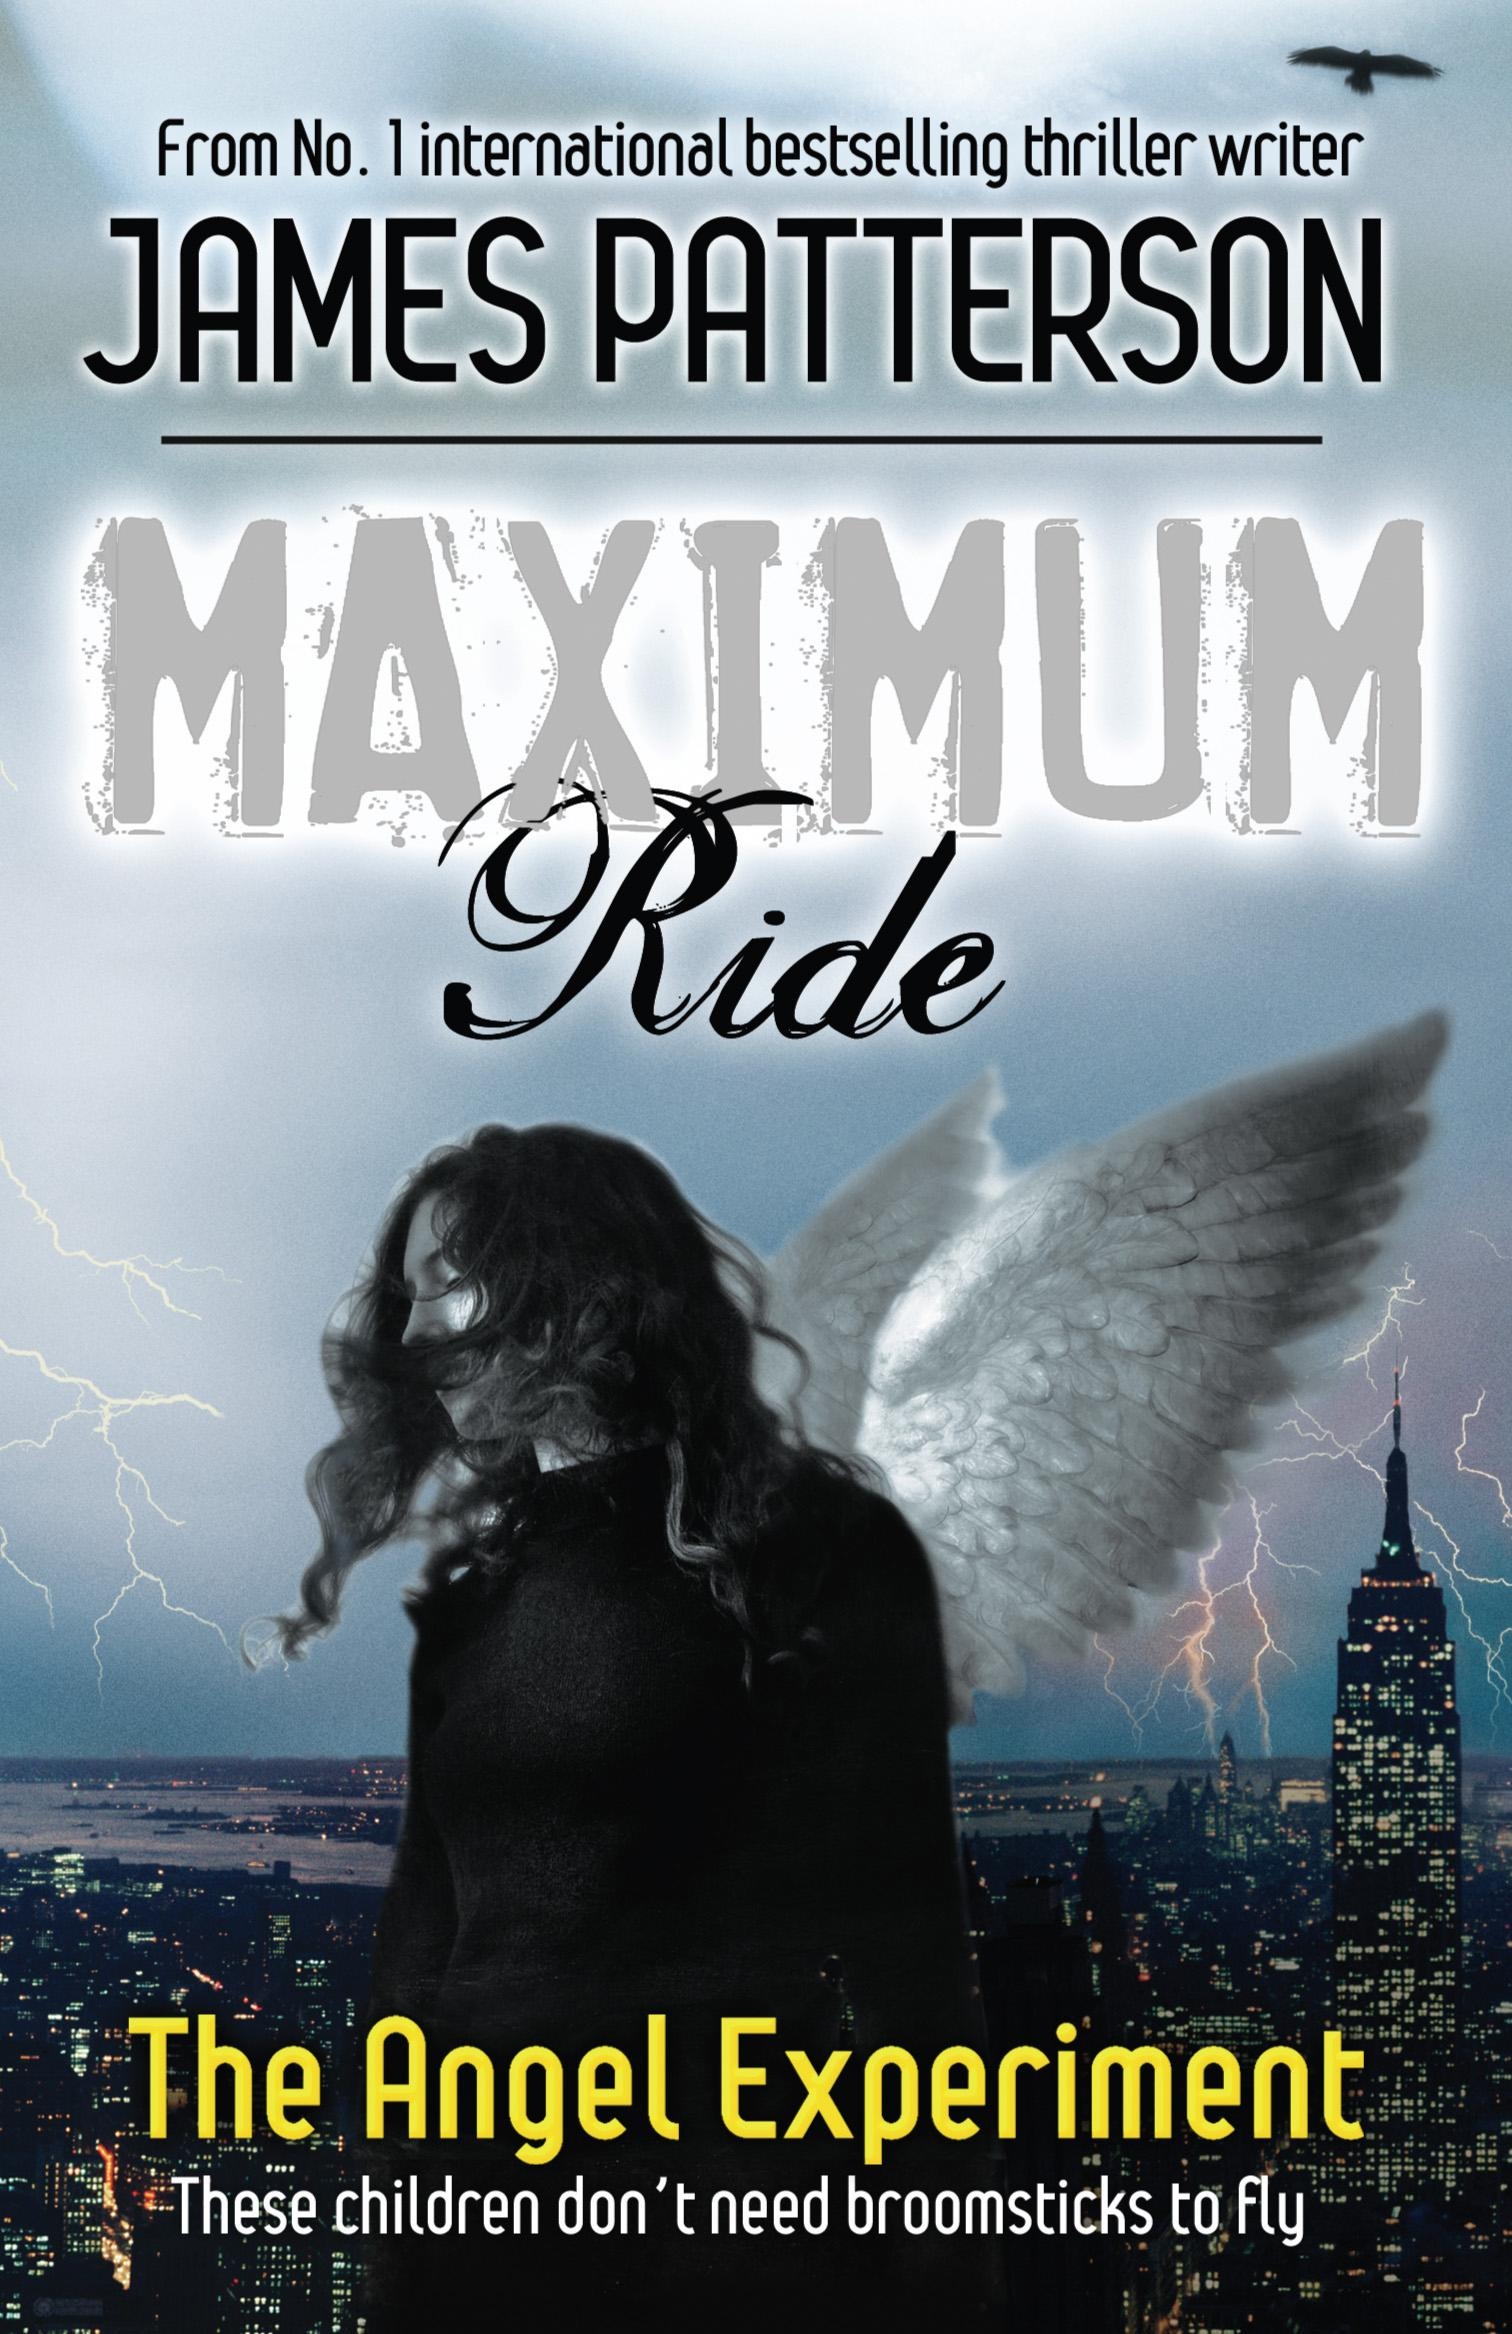 maximum ride the angel experiment book